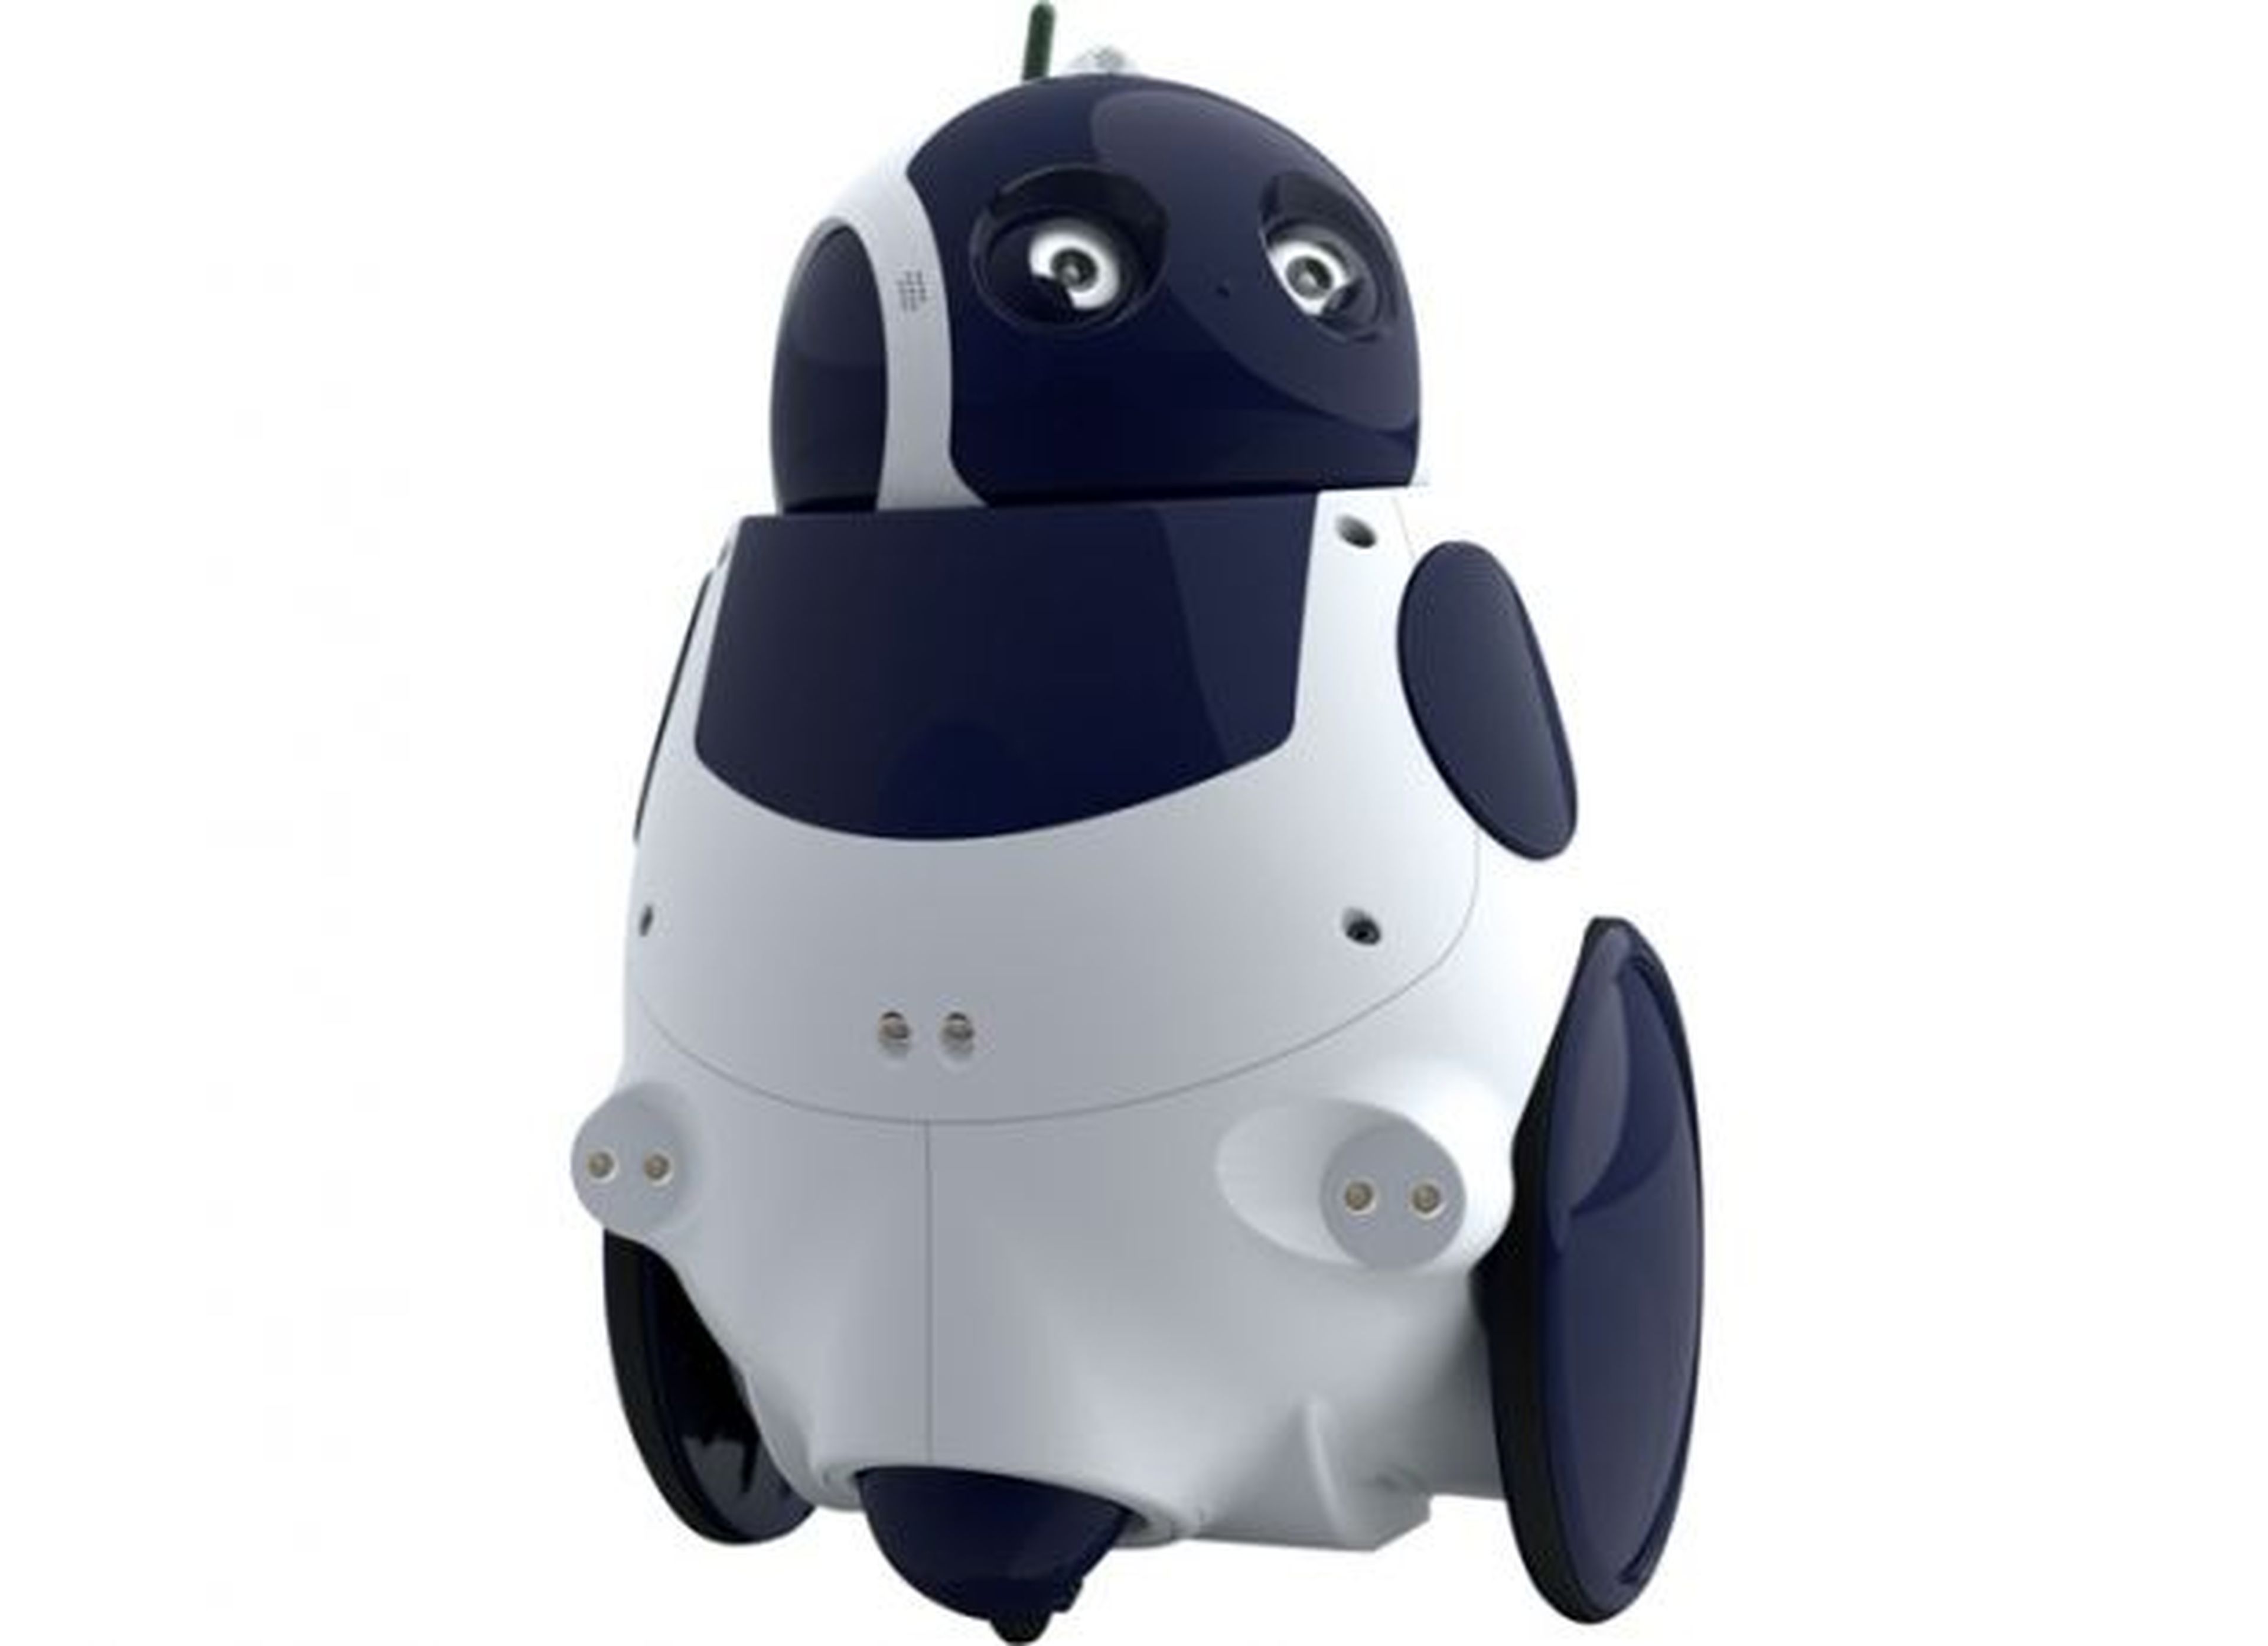 Qbo robot basado en Ubuntu